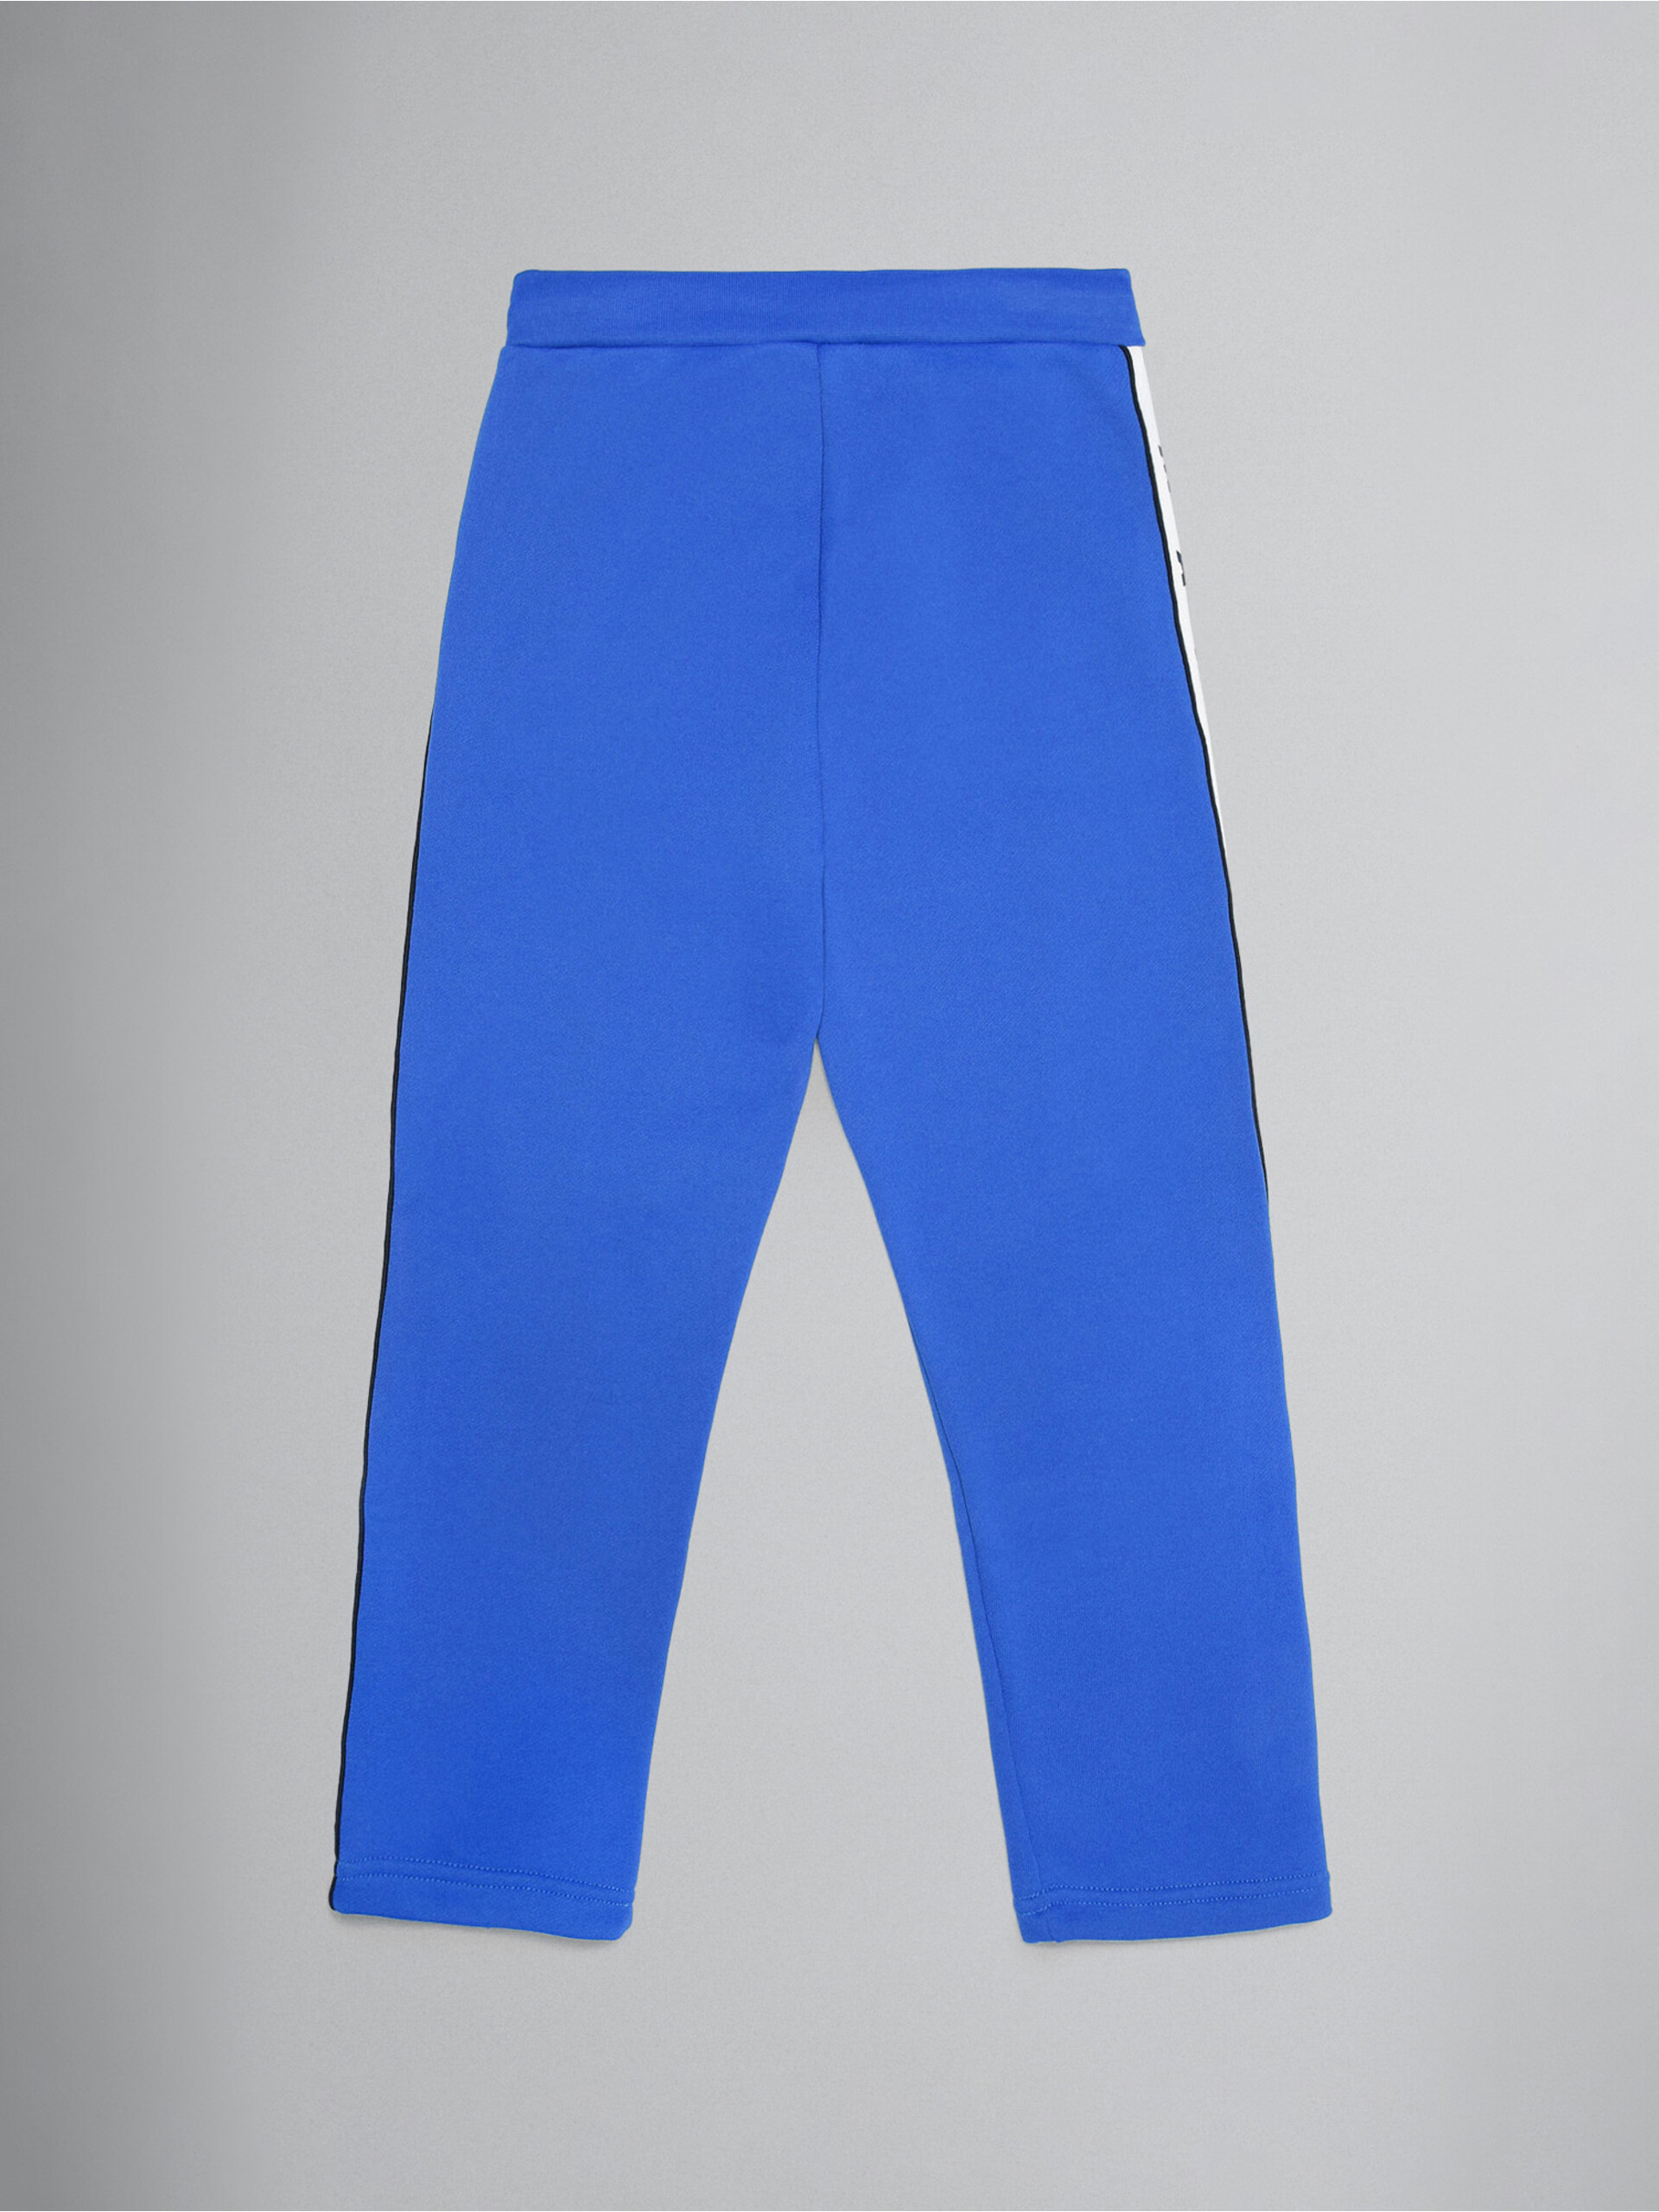 Blue technical fleece pants with logo tape - Pants - Image 2